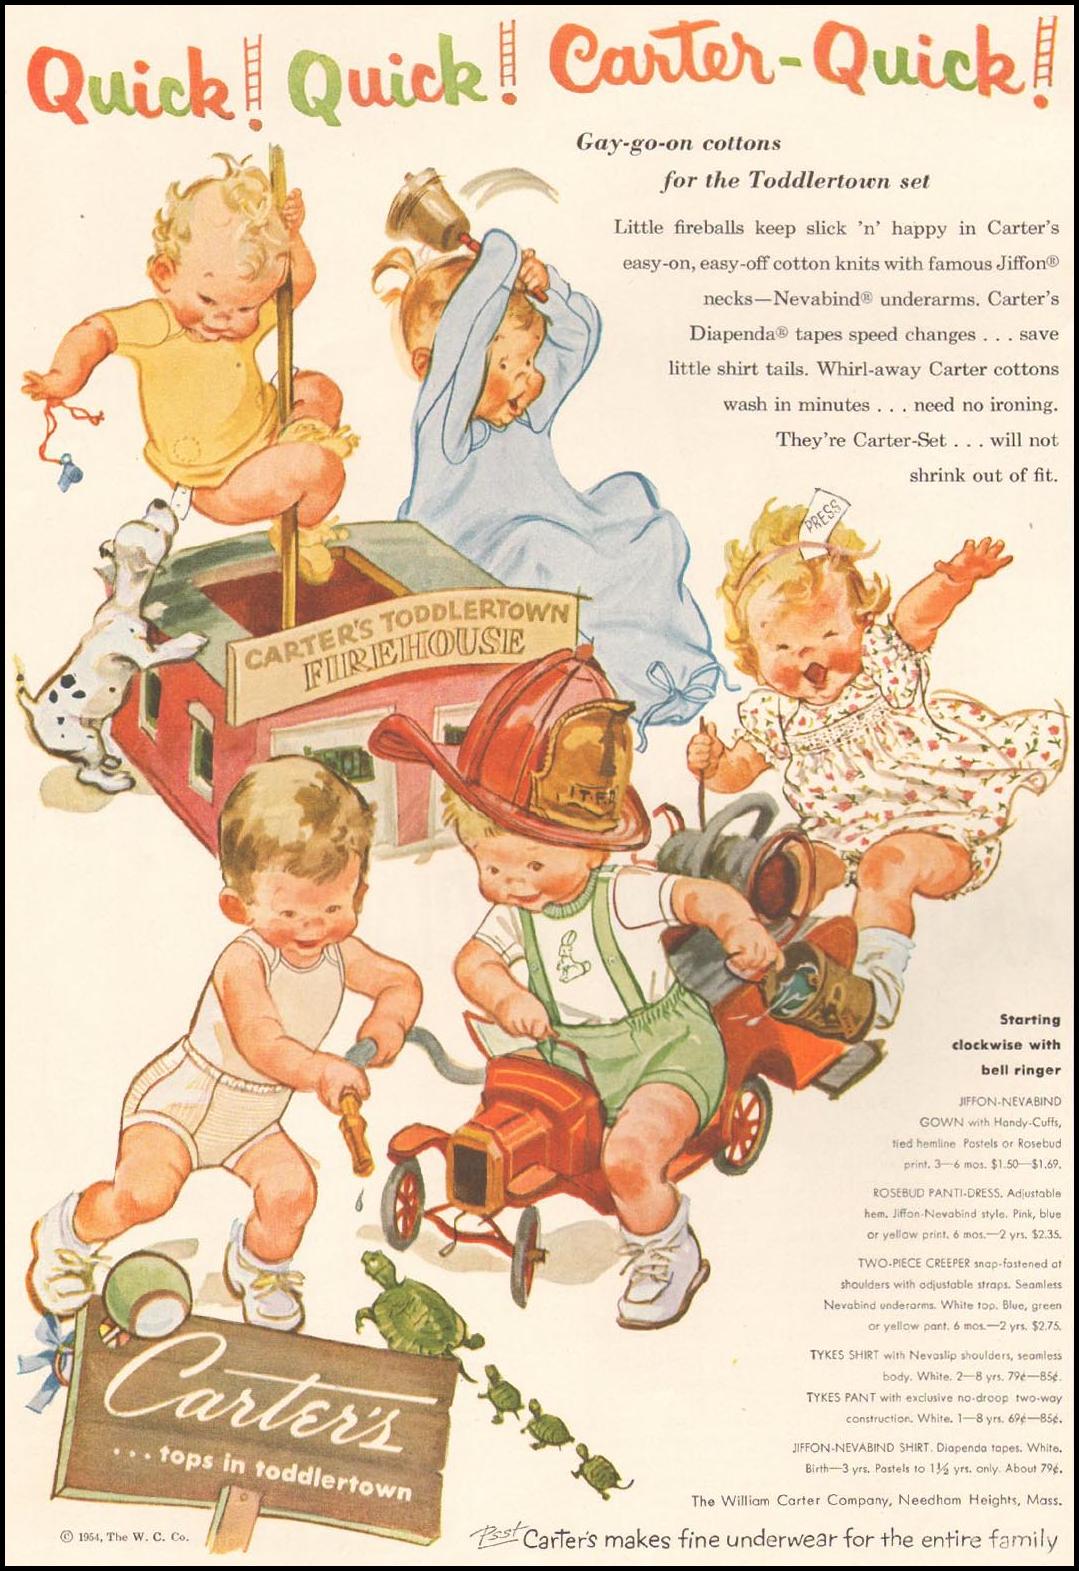 CARTER'S CHILDREN'S APPAREL
LADIES' HOME JOURNAL
03/01/1954
p. 178